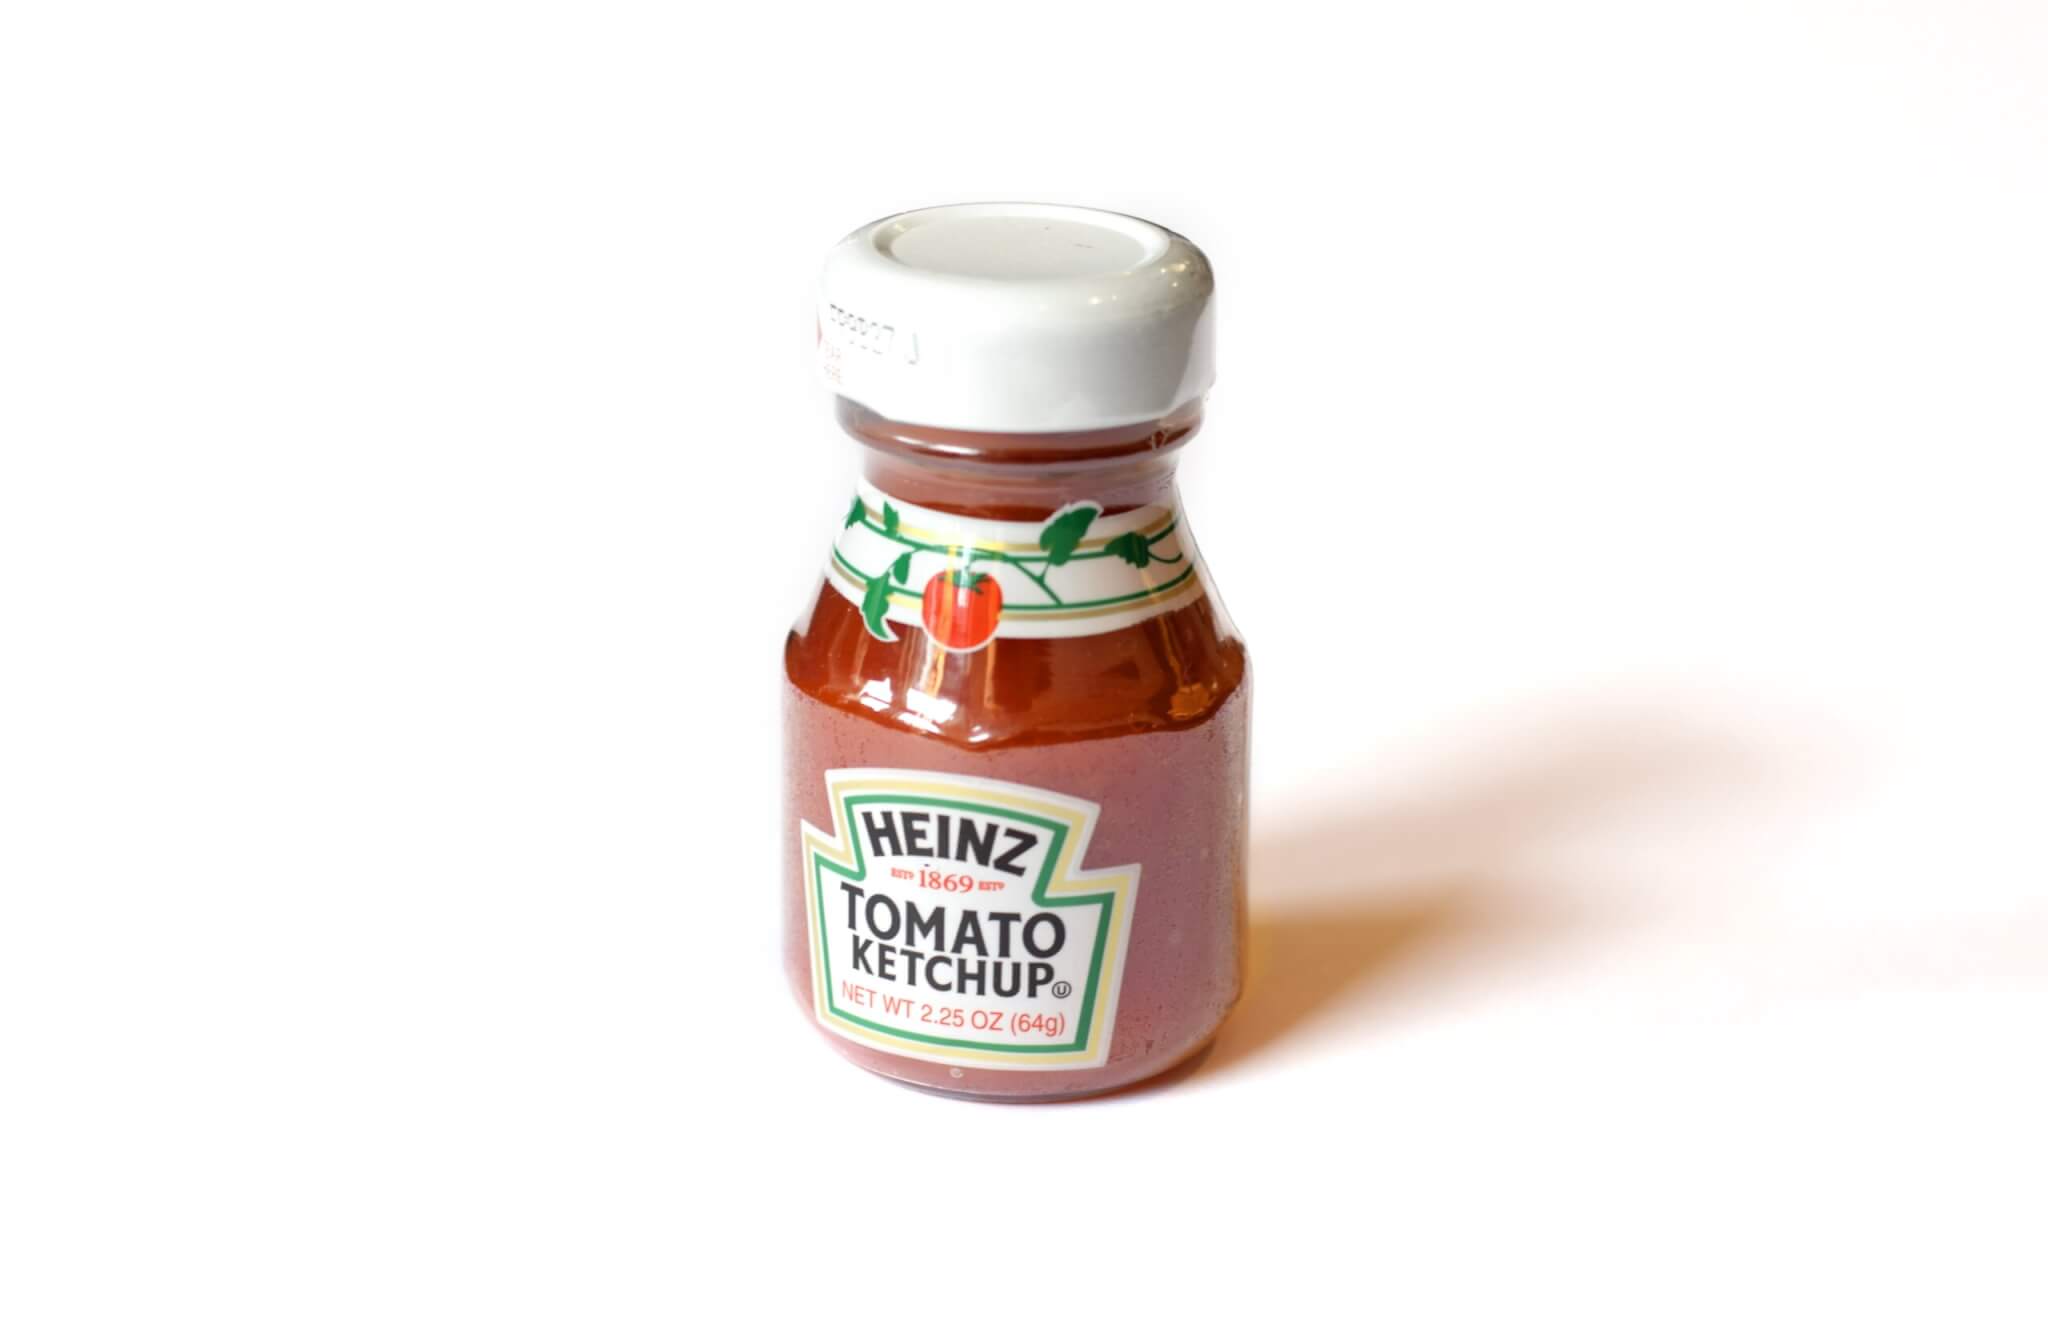 Heinz ketchup bottle